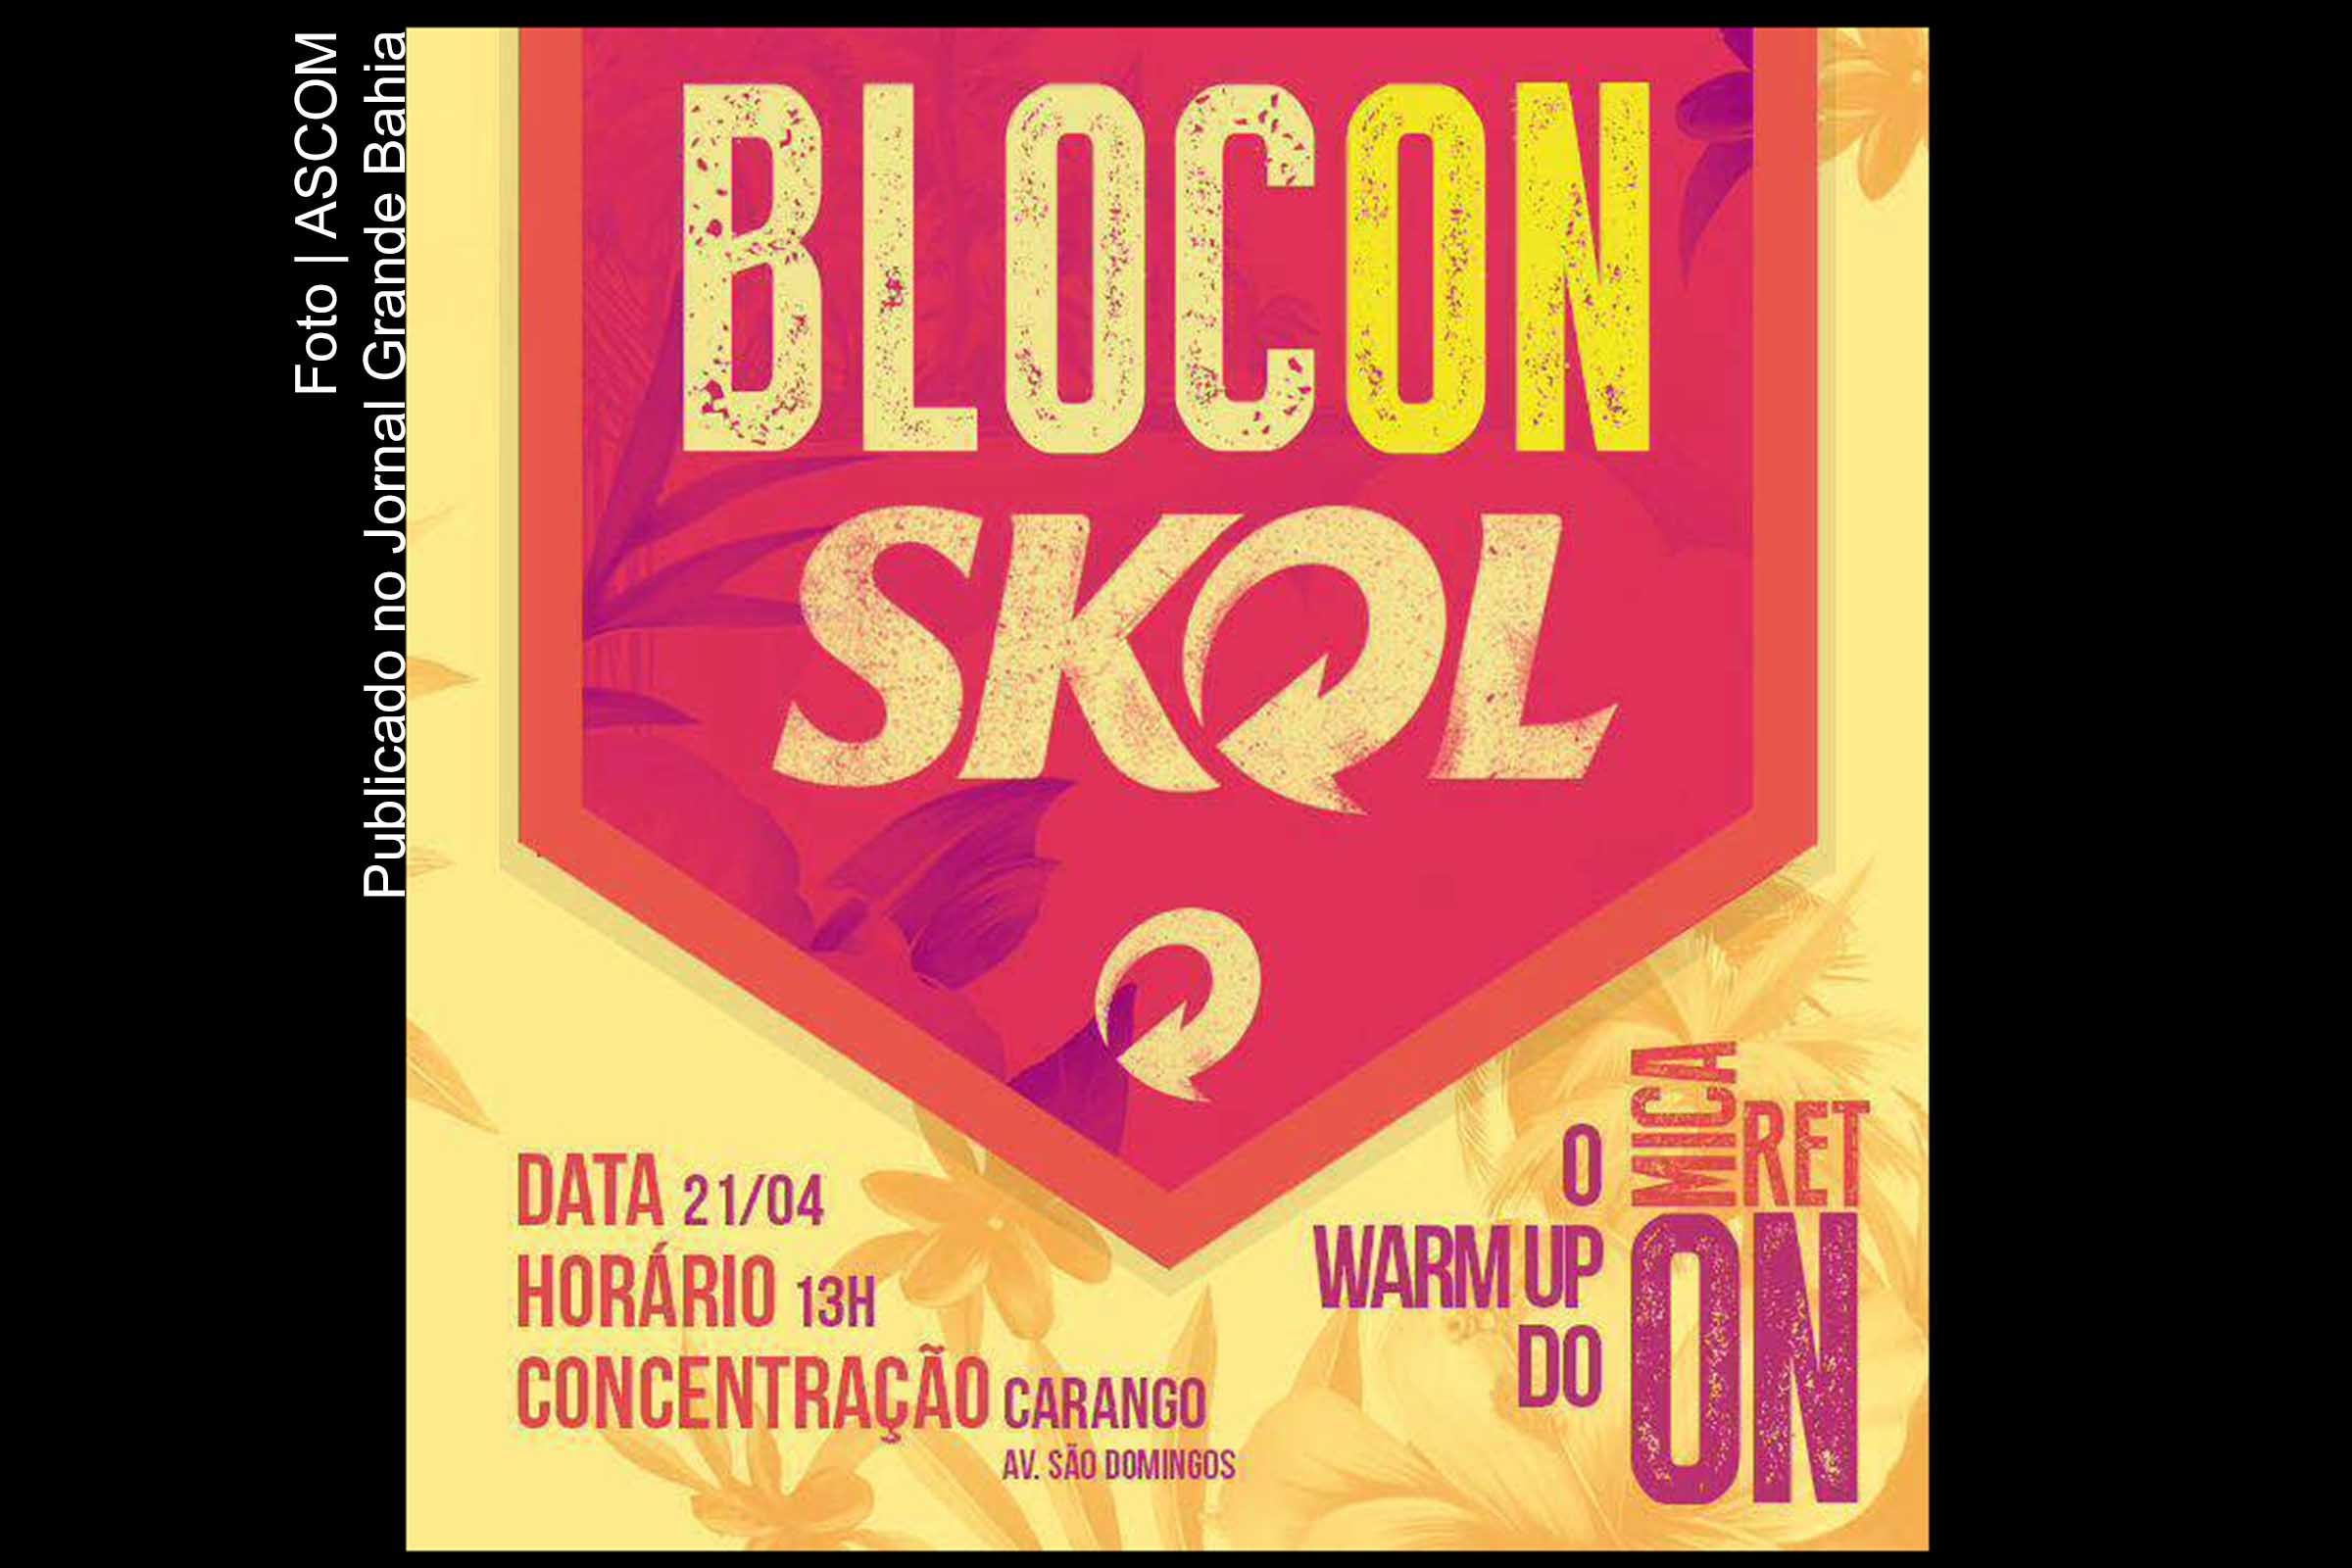 BlocON da Skol promove atividade durante pré-micareta 2016.